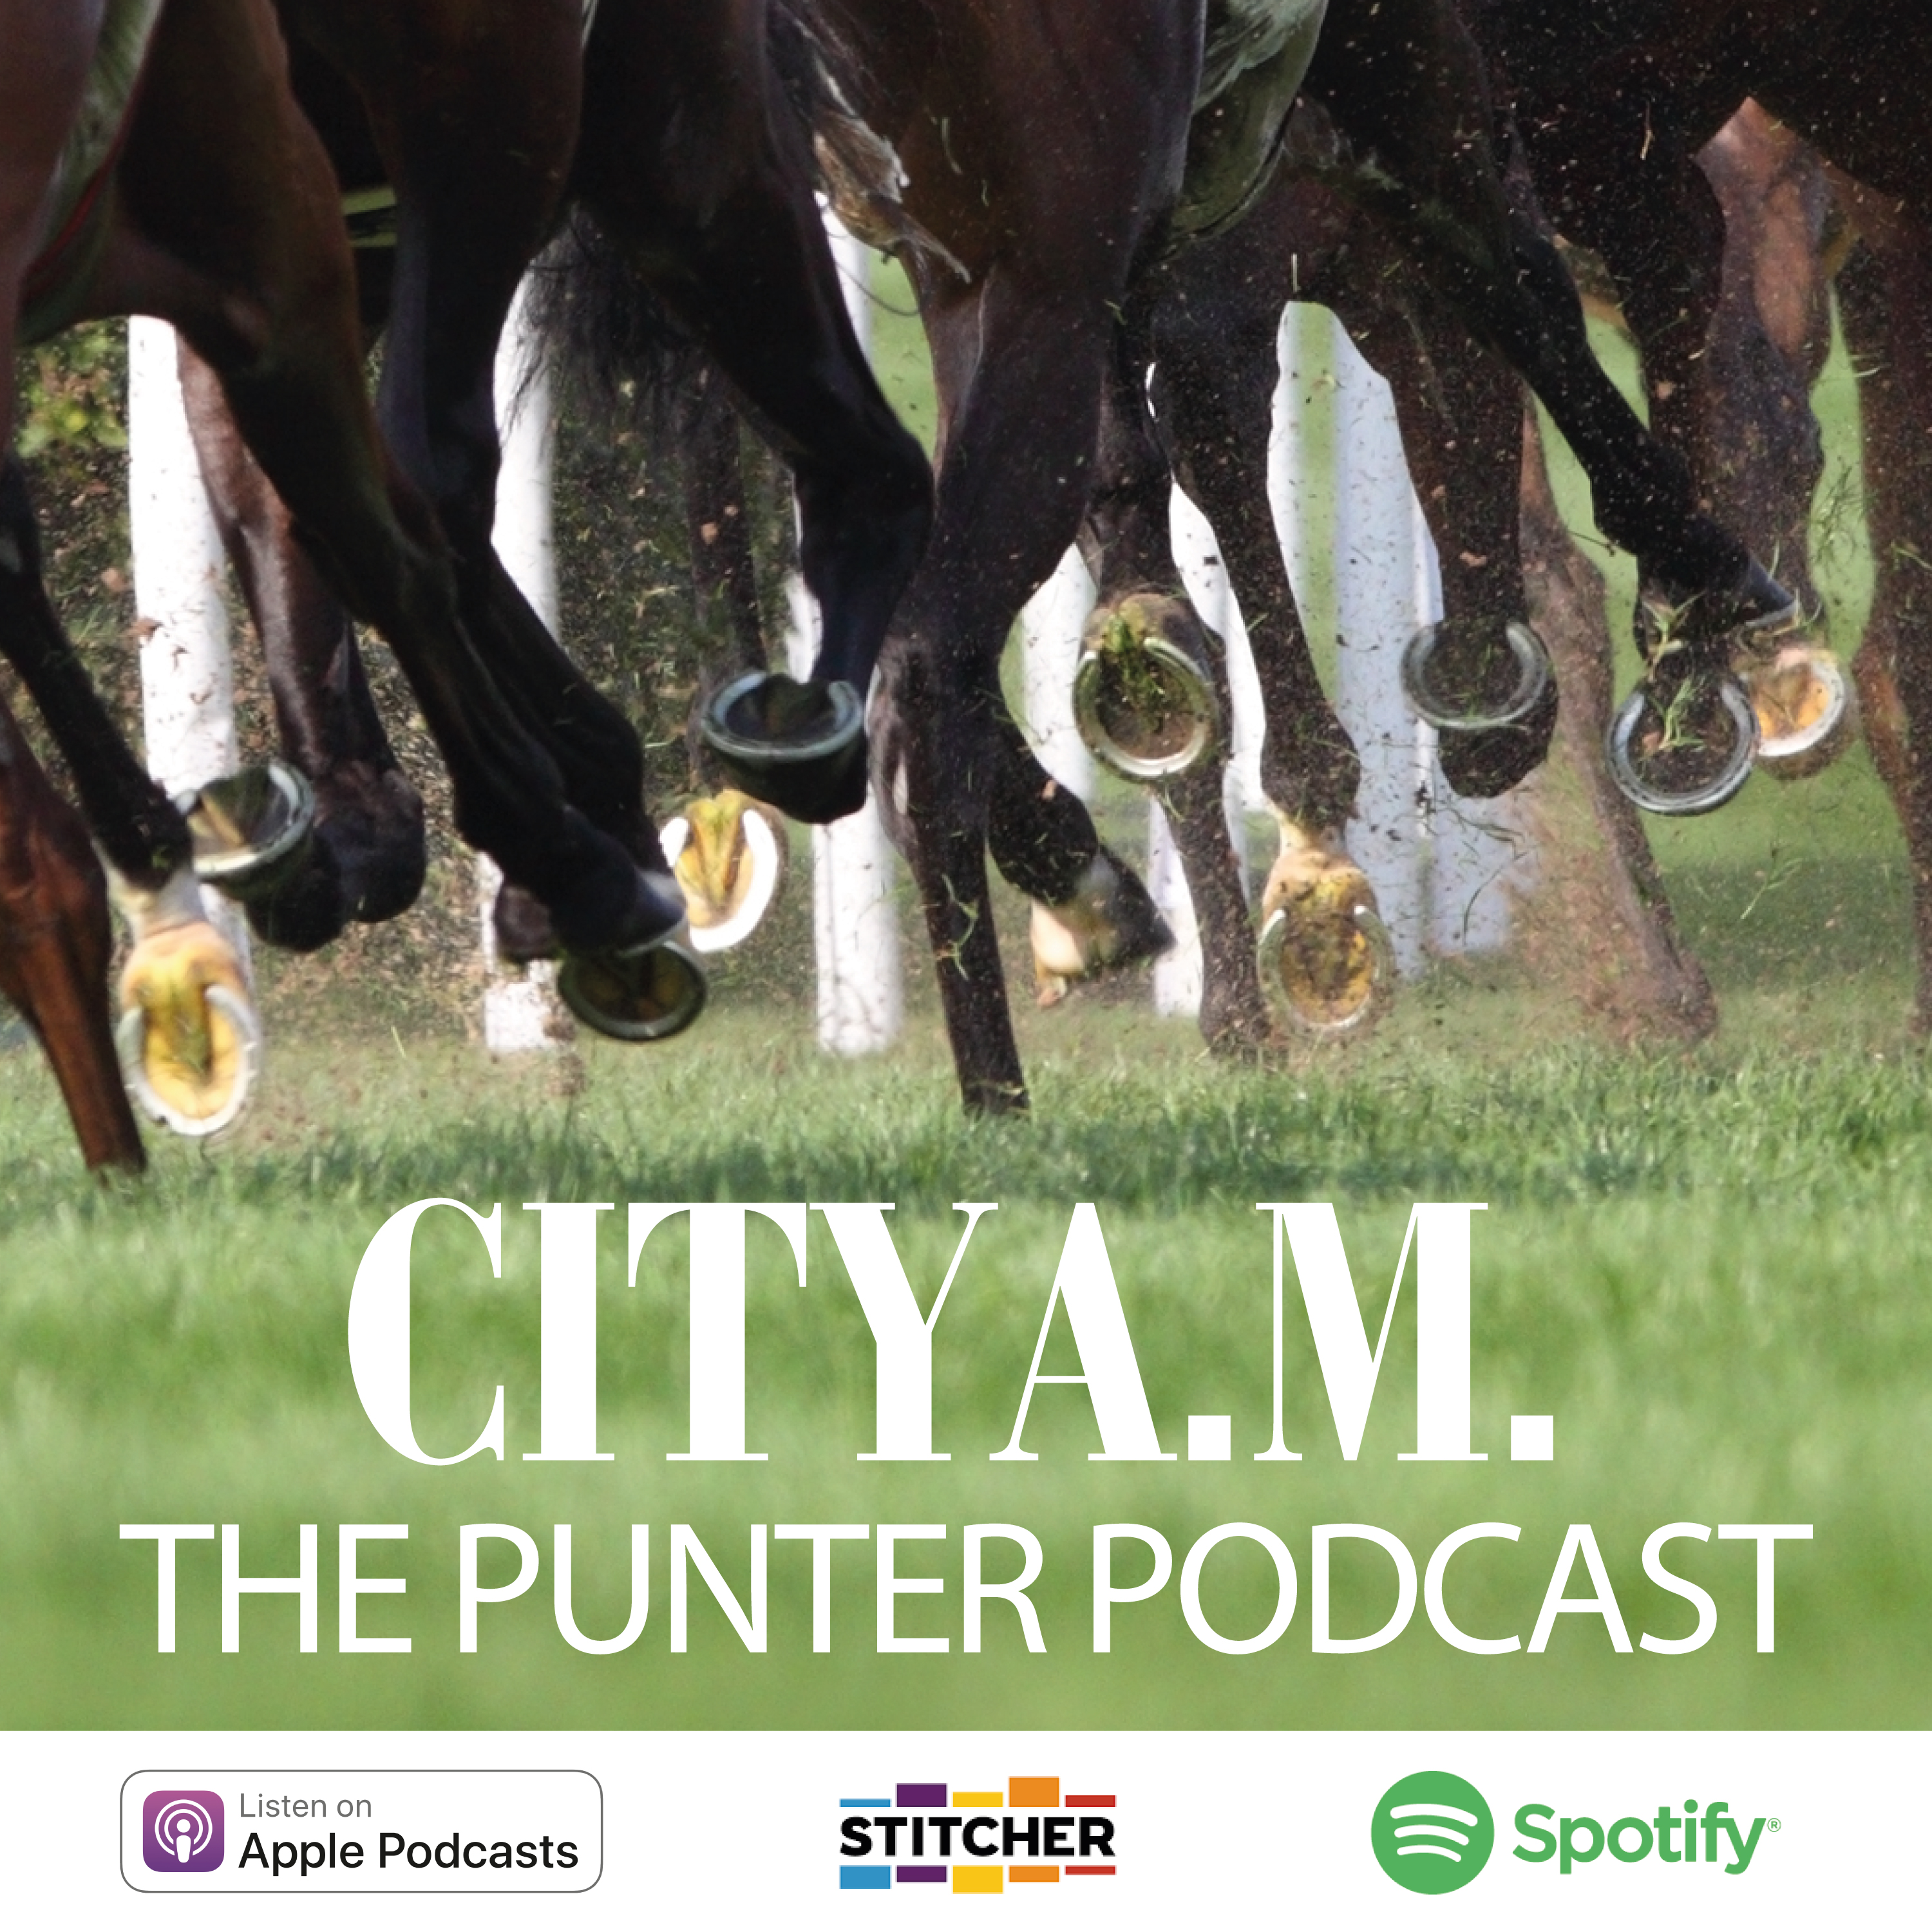 Cheltenham Tuesday - Punter Podcast Summary